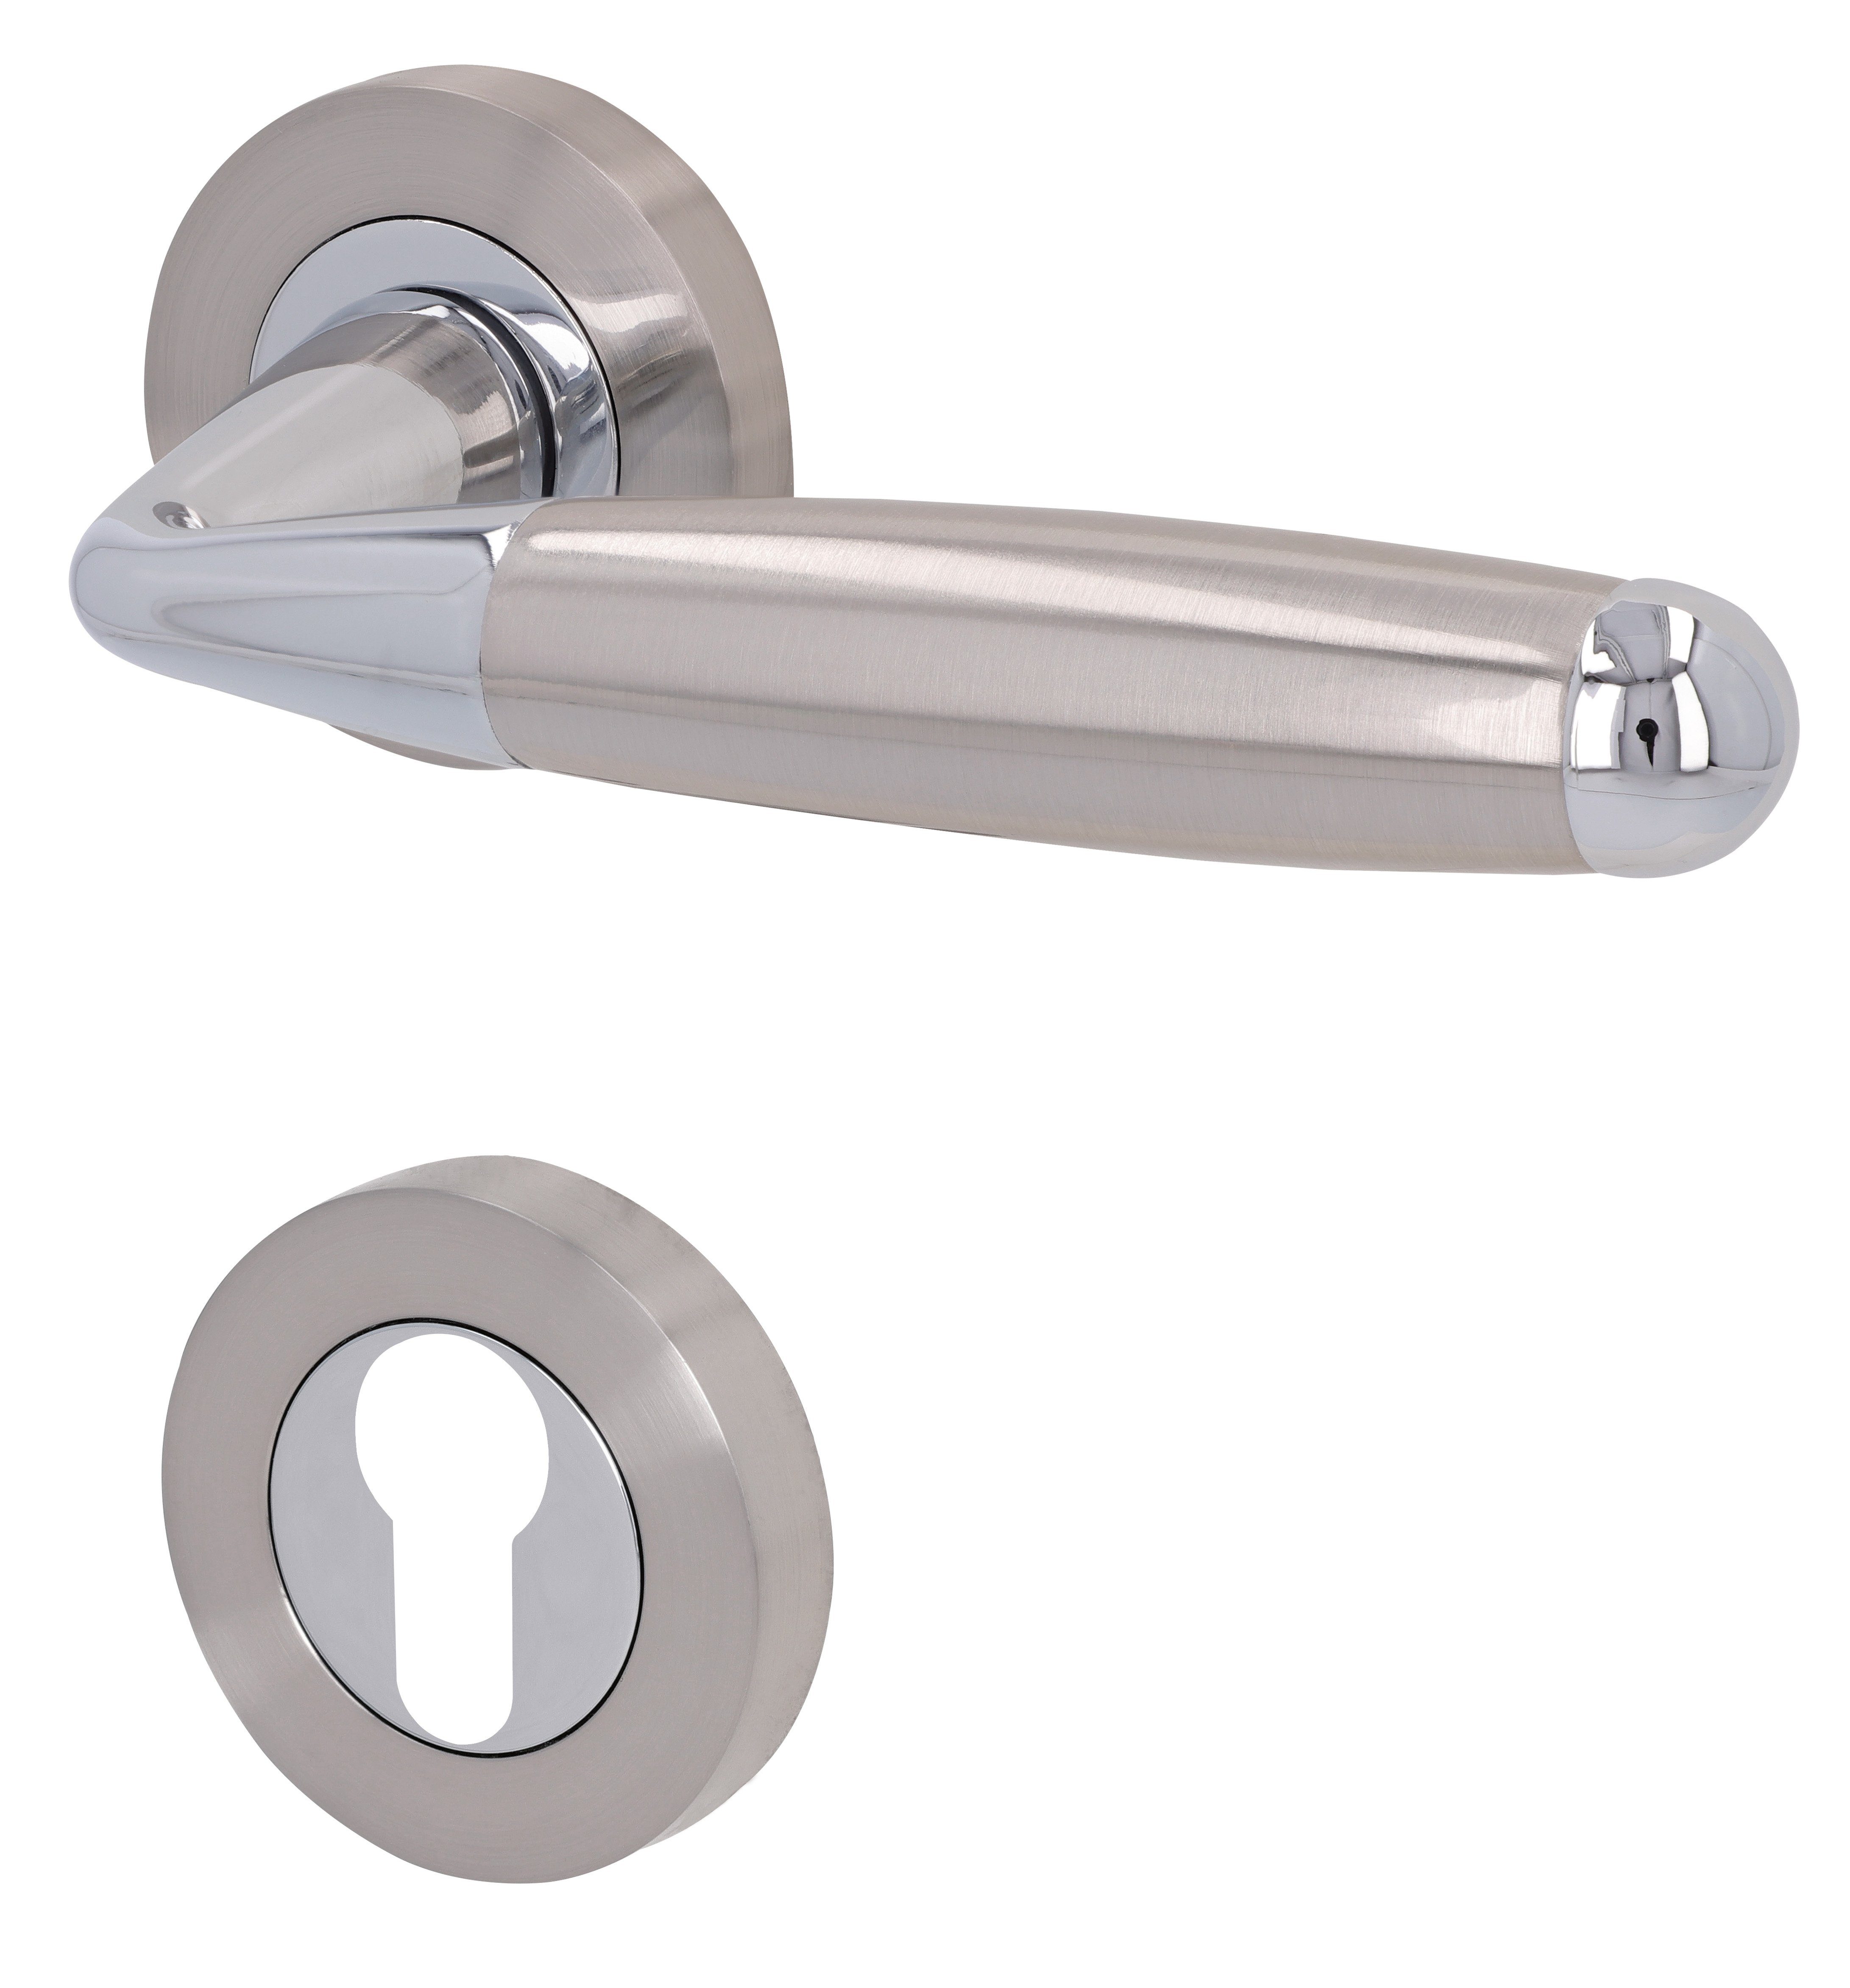 Alpertec Türbeschlag Rosettengarnitur L17/A158 für Türen mit Profilzylinderlochung, Dr/Dr (1 St)